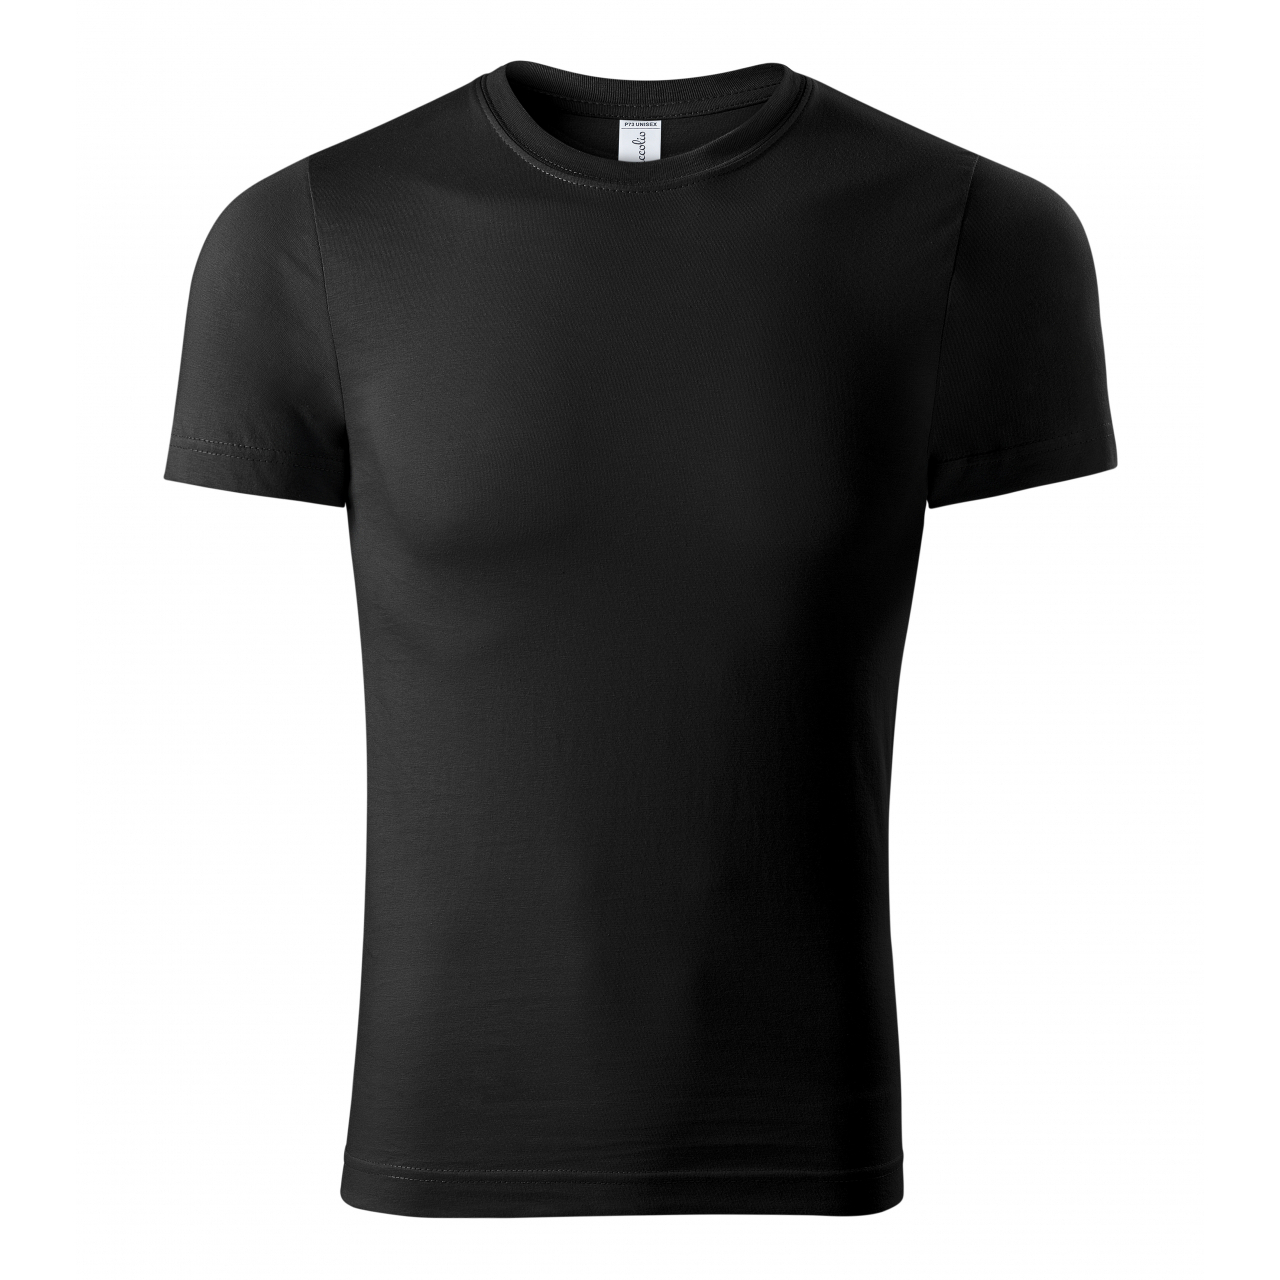 Tričko unisex Piccolio Paint - černé, XL